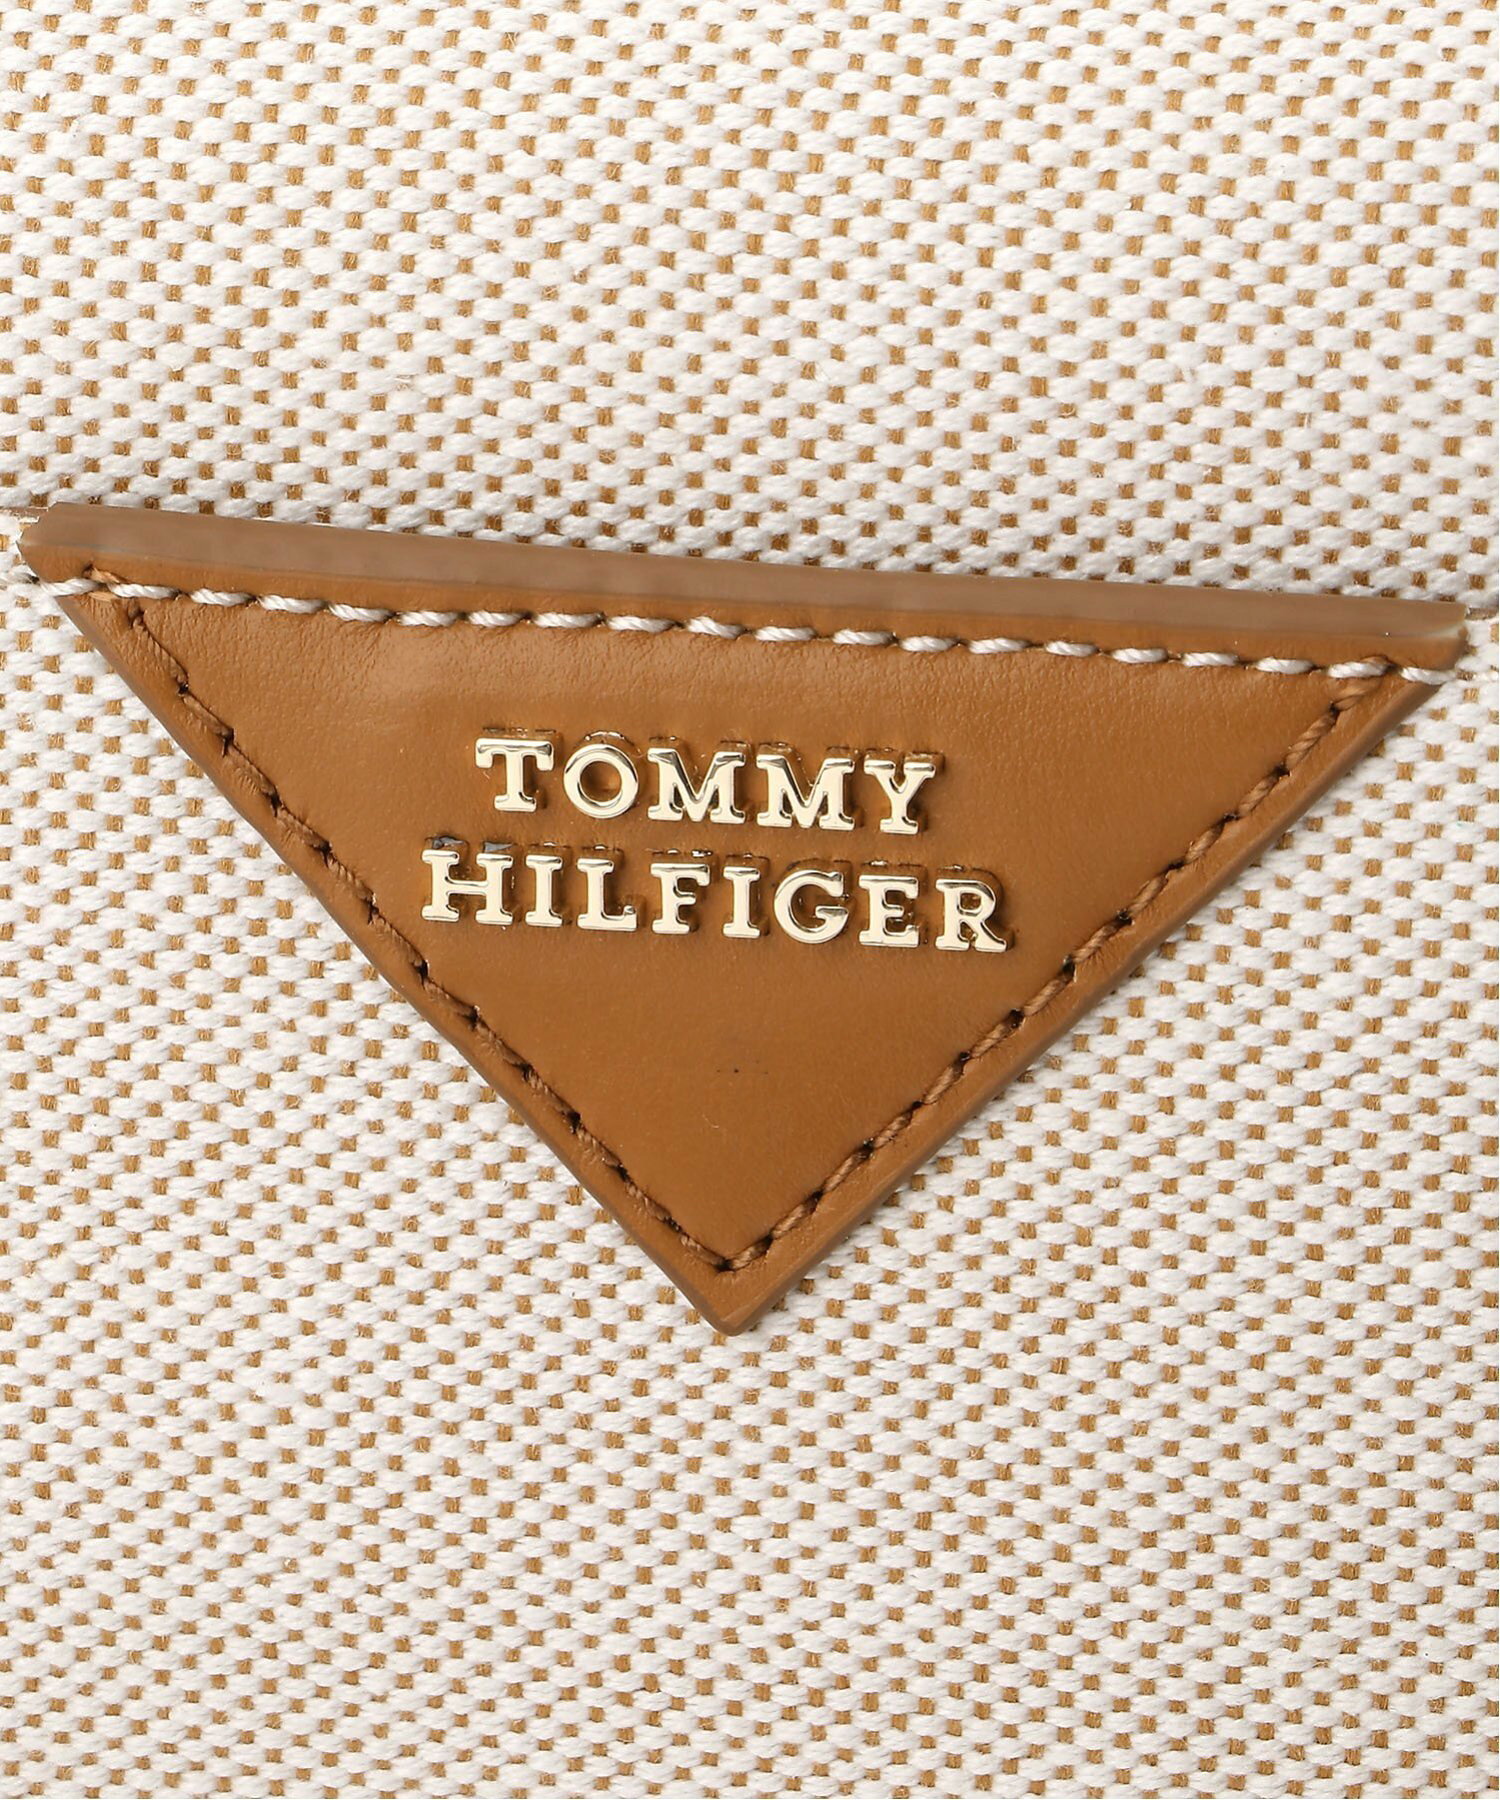 TOMMY HILFIGER(トミーヒルフィガー) ロゴレザーキャンバスクロスボディバッグ